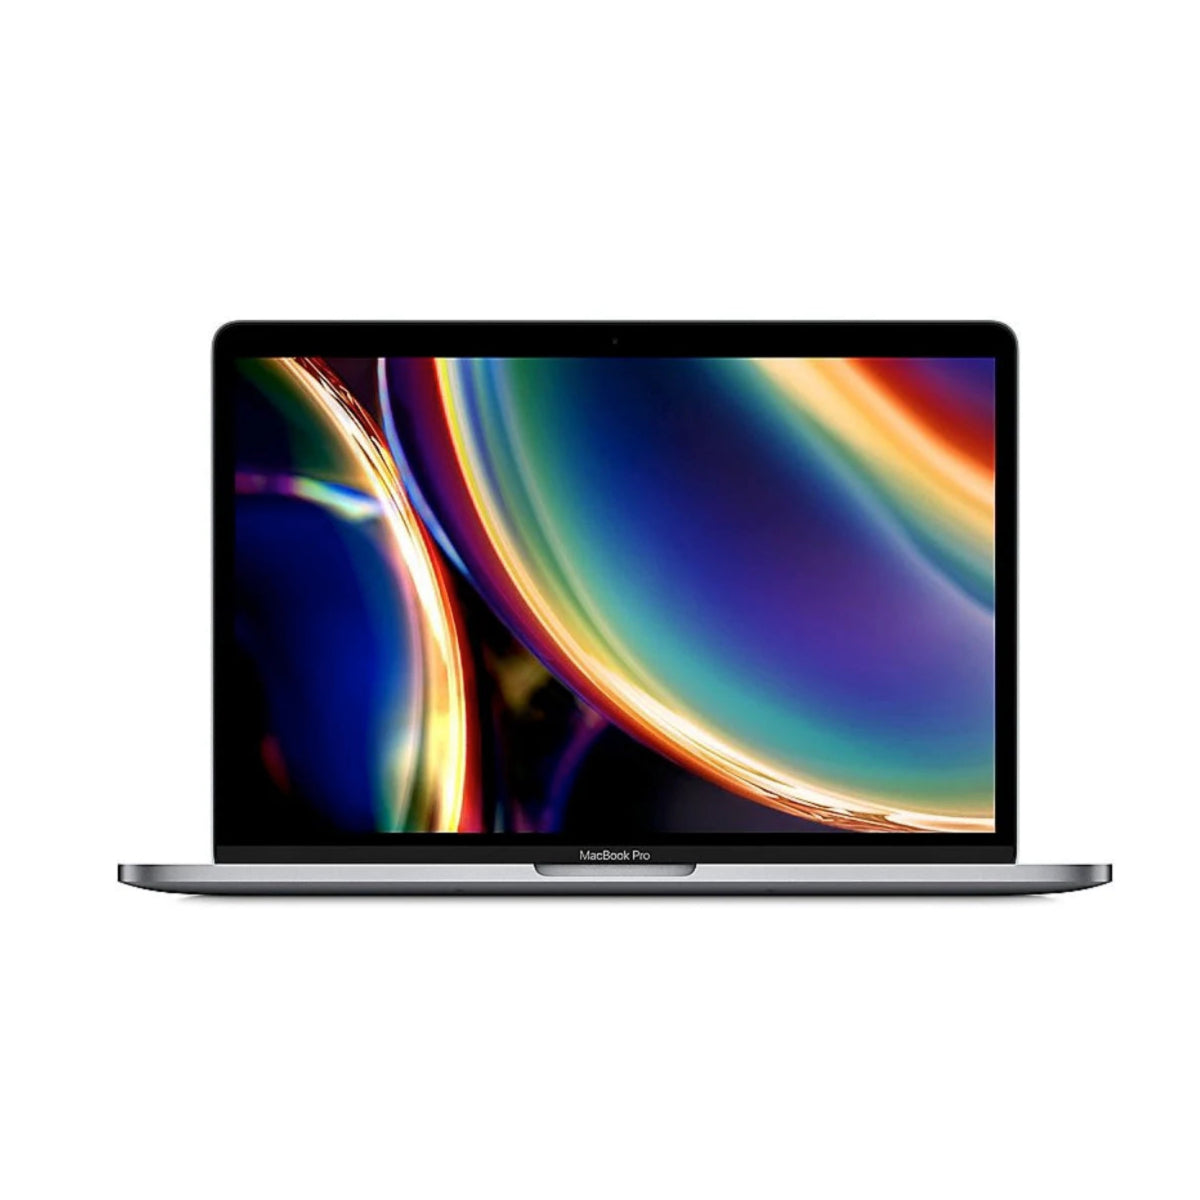 MacBook Pro Touchbar 13-inch i7 2.3 Ghz 16GB 512GB - test-product-media-liquid1